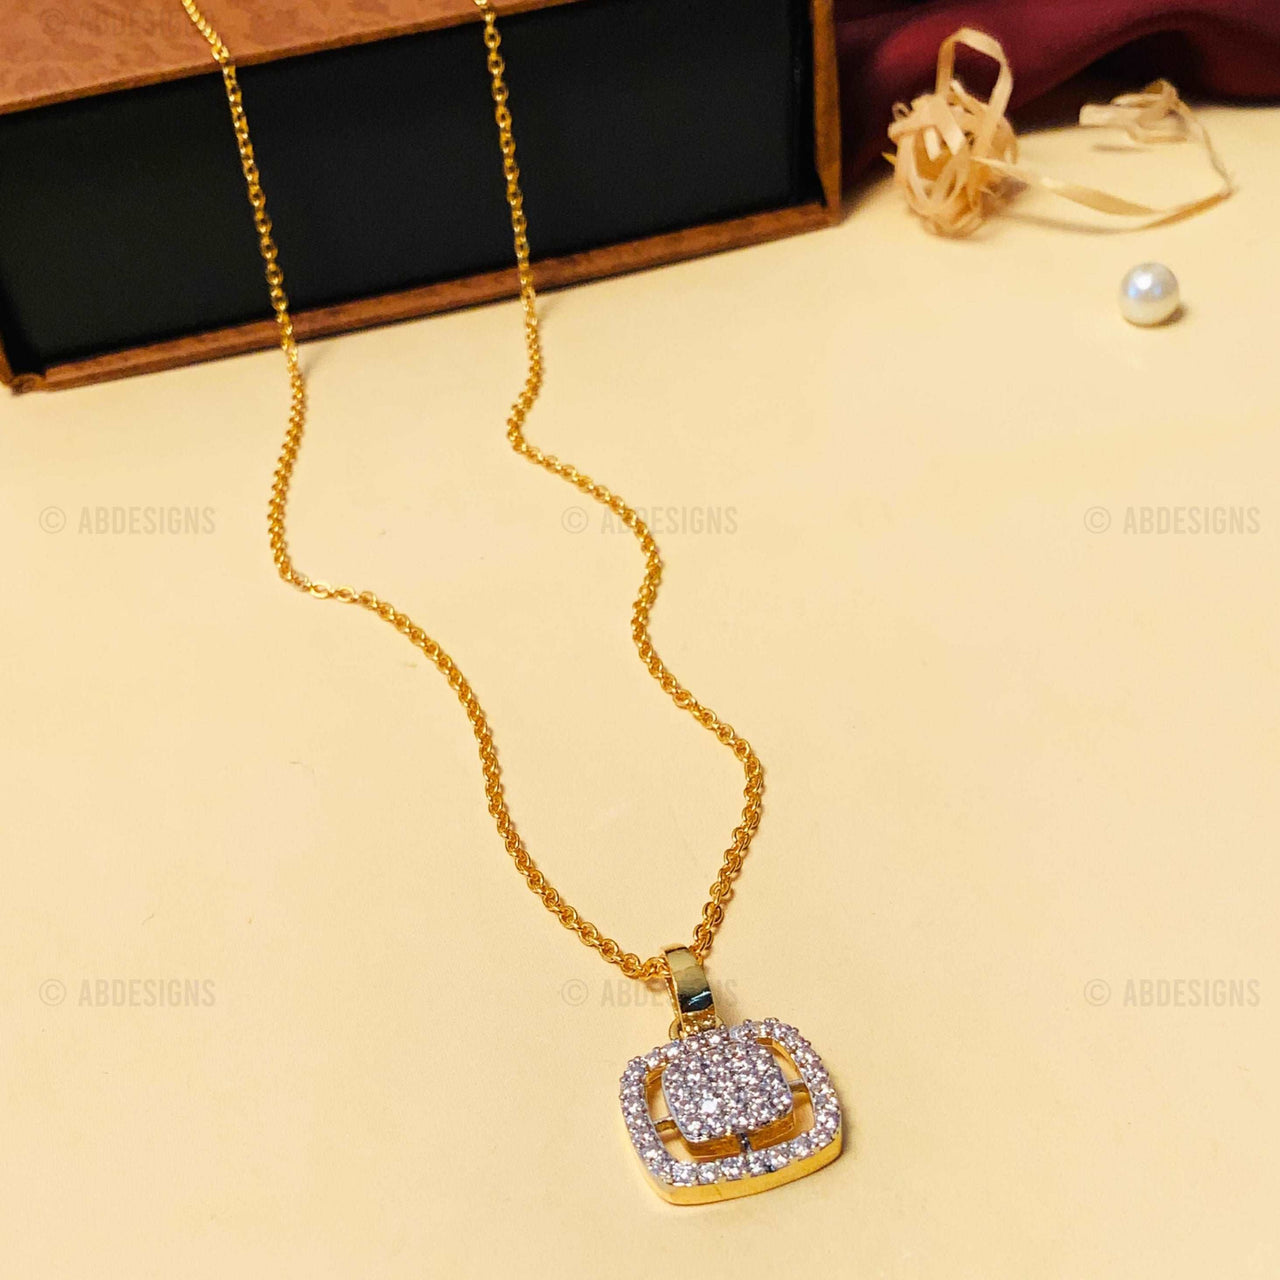 Alluring High-Quality Gold Plated Pendant Chain - Abdesignsjewellery